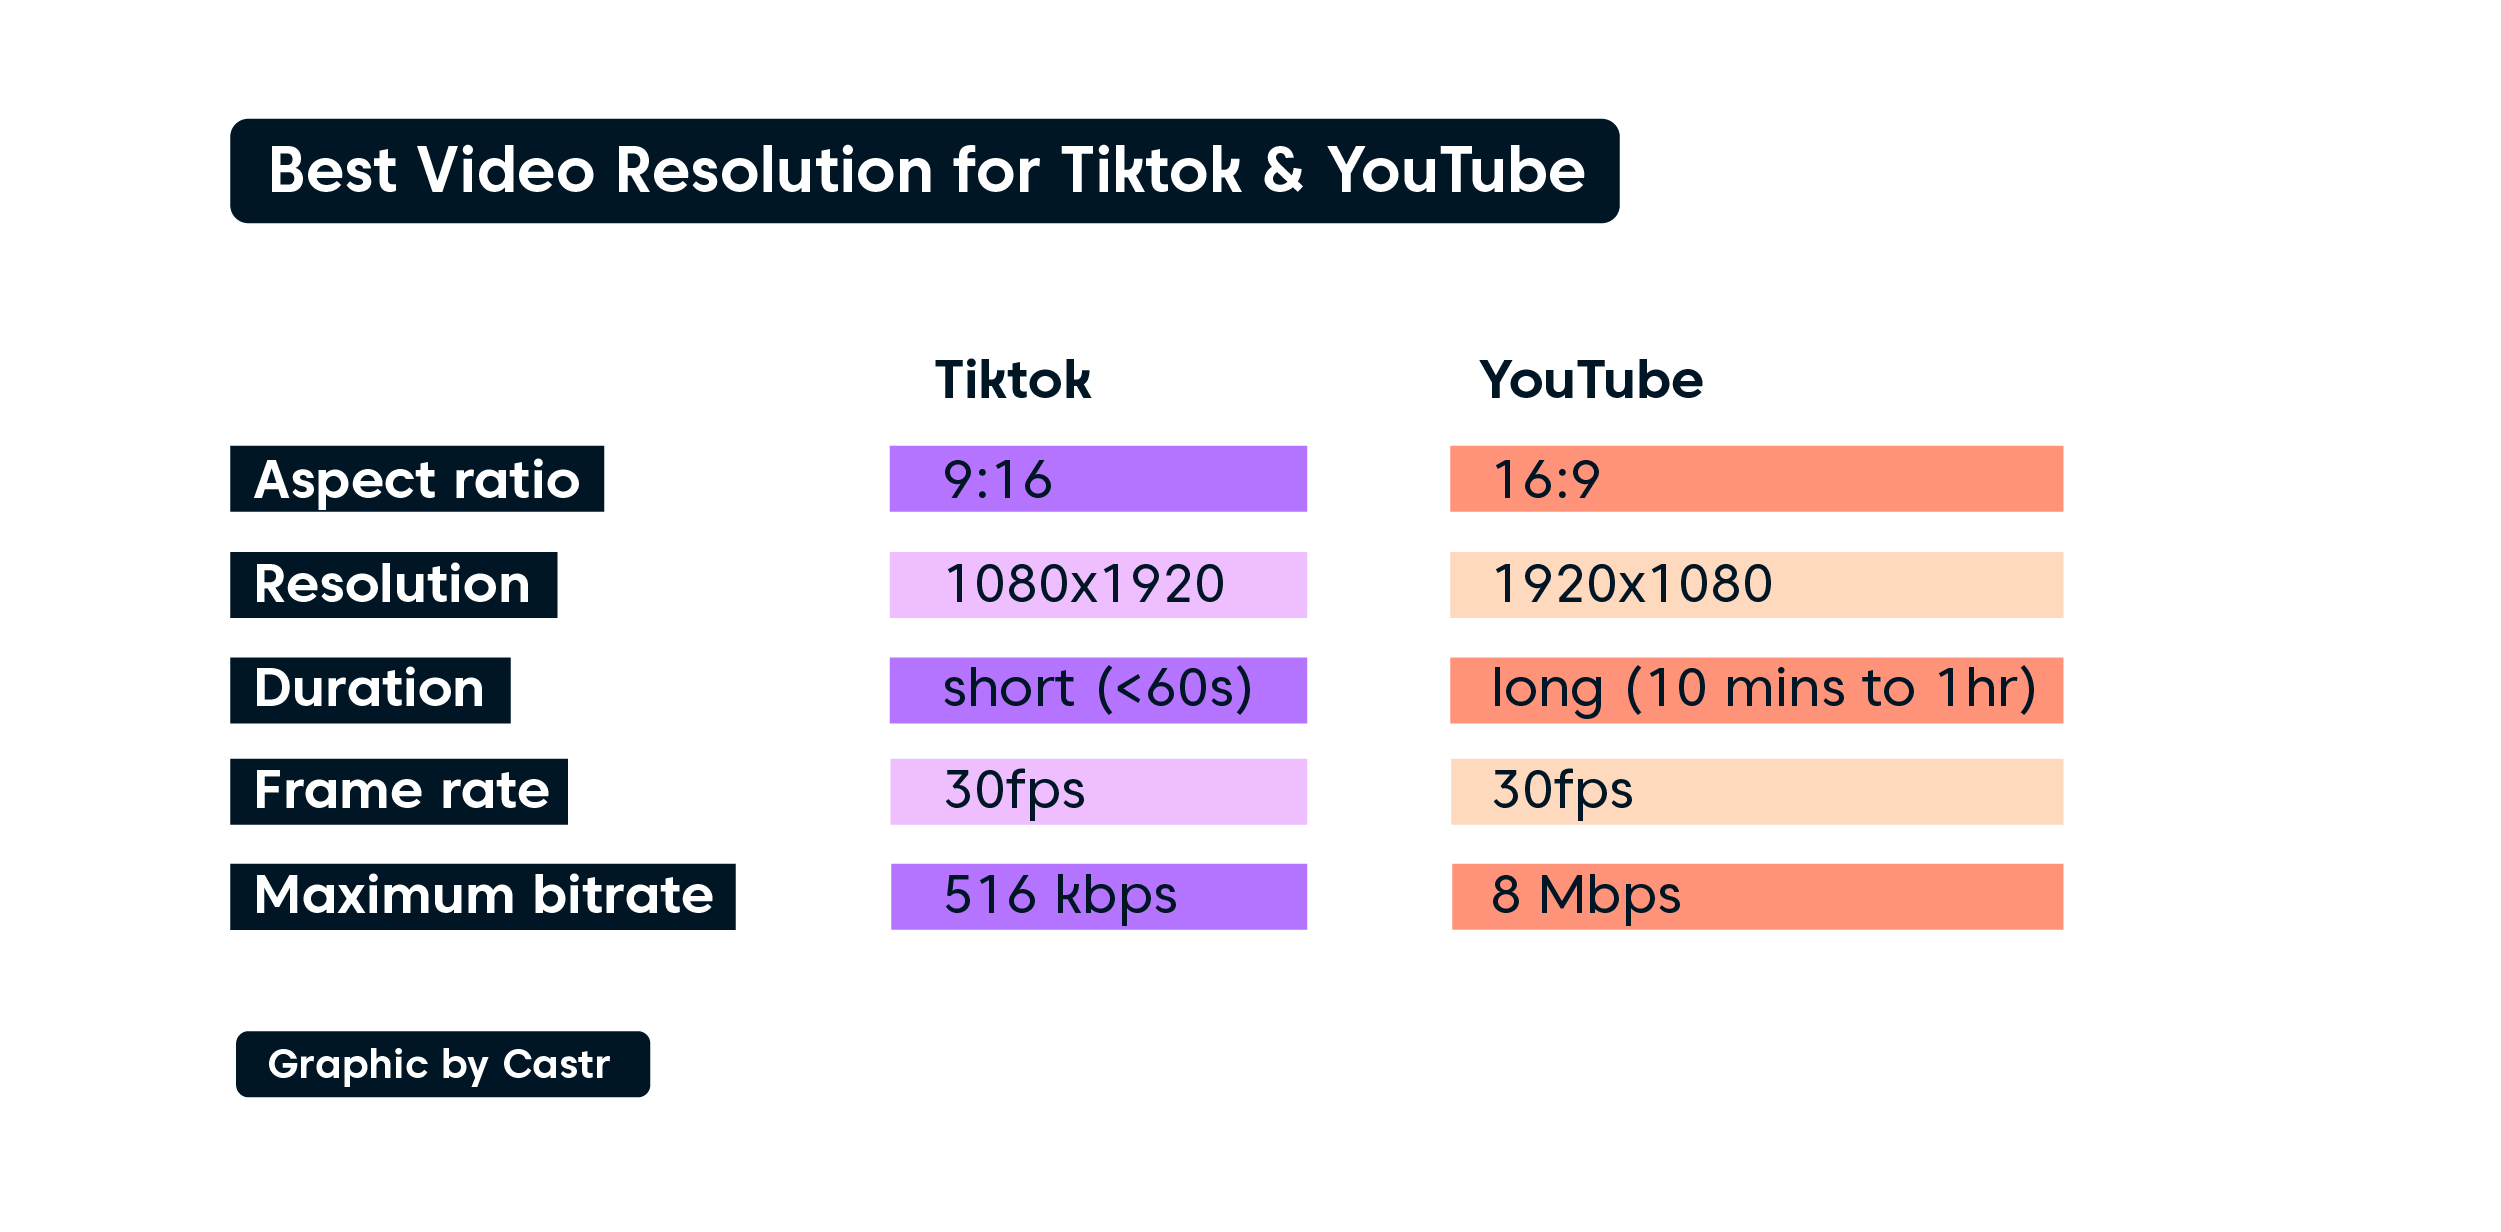 Tiktok 和 YouTube 的最佳视频分辨率